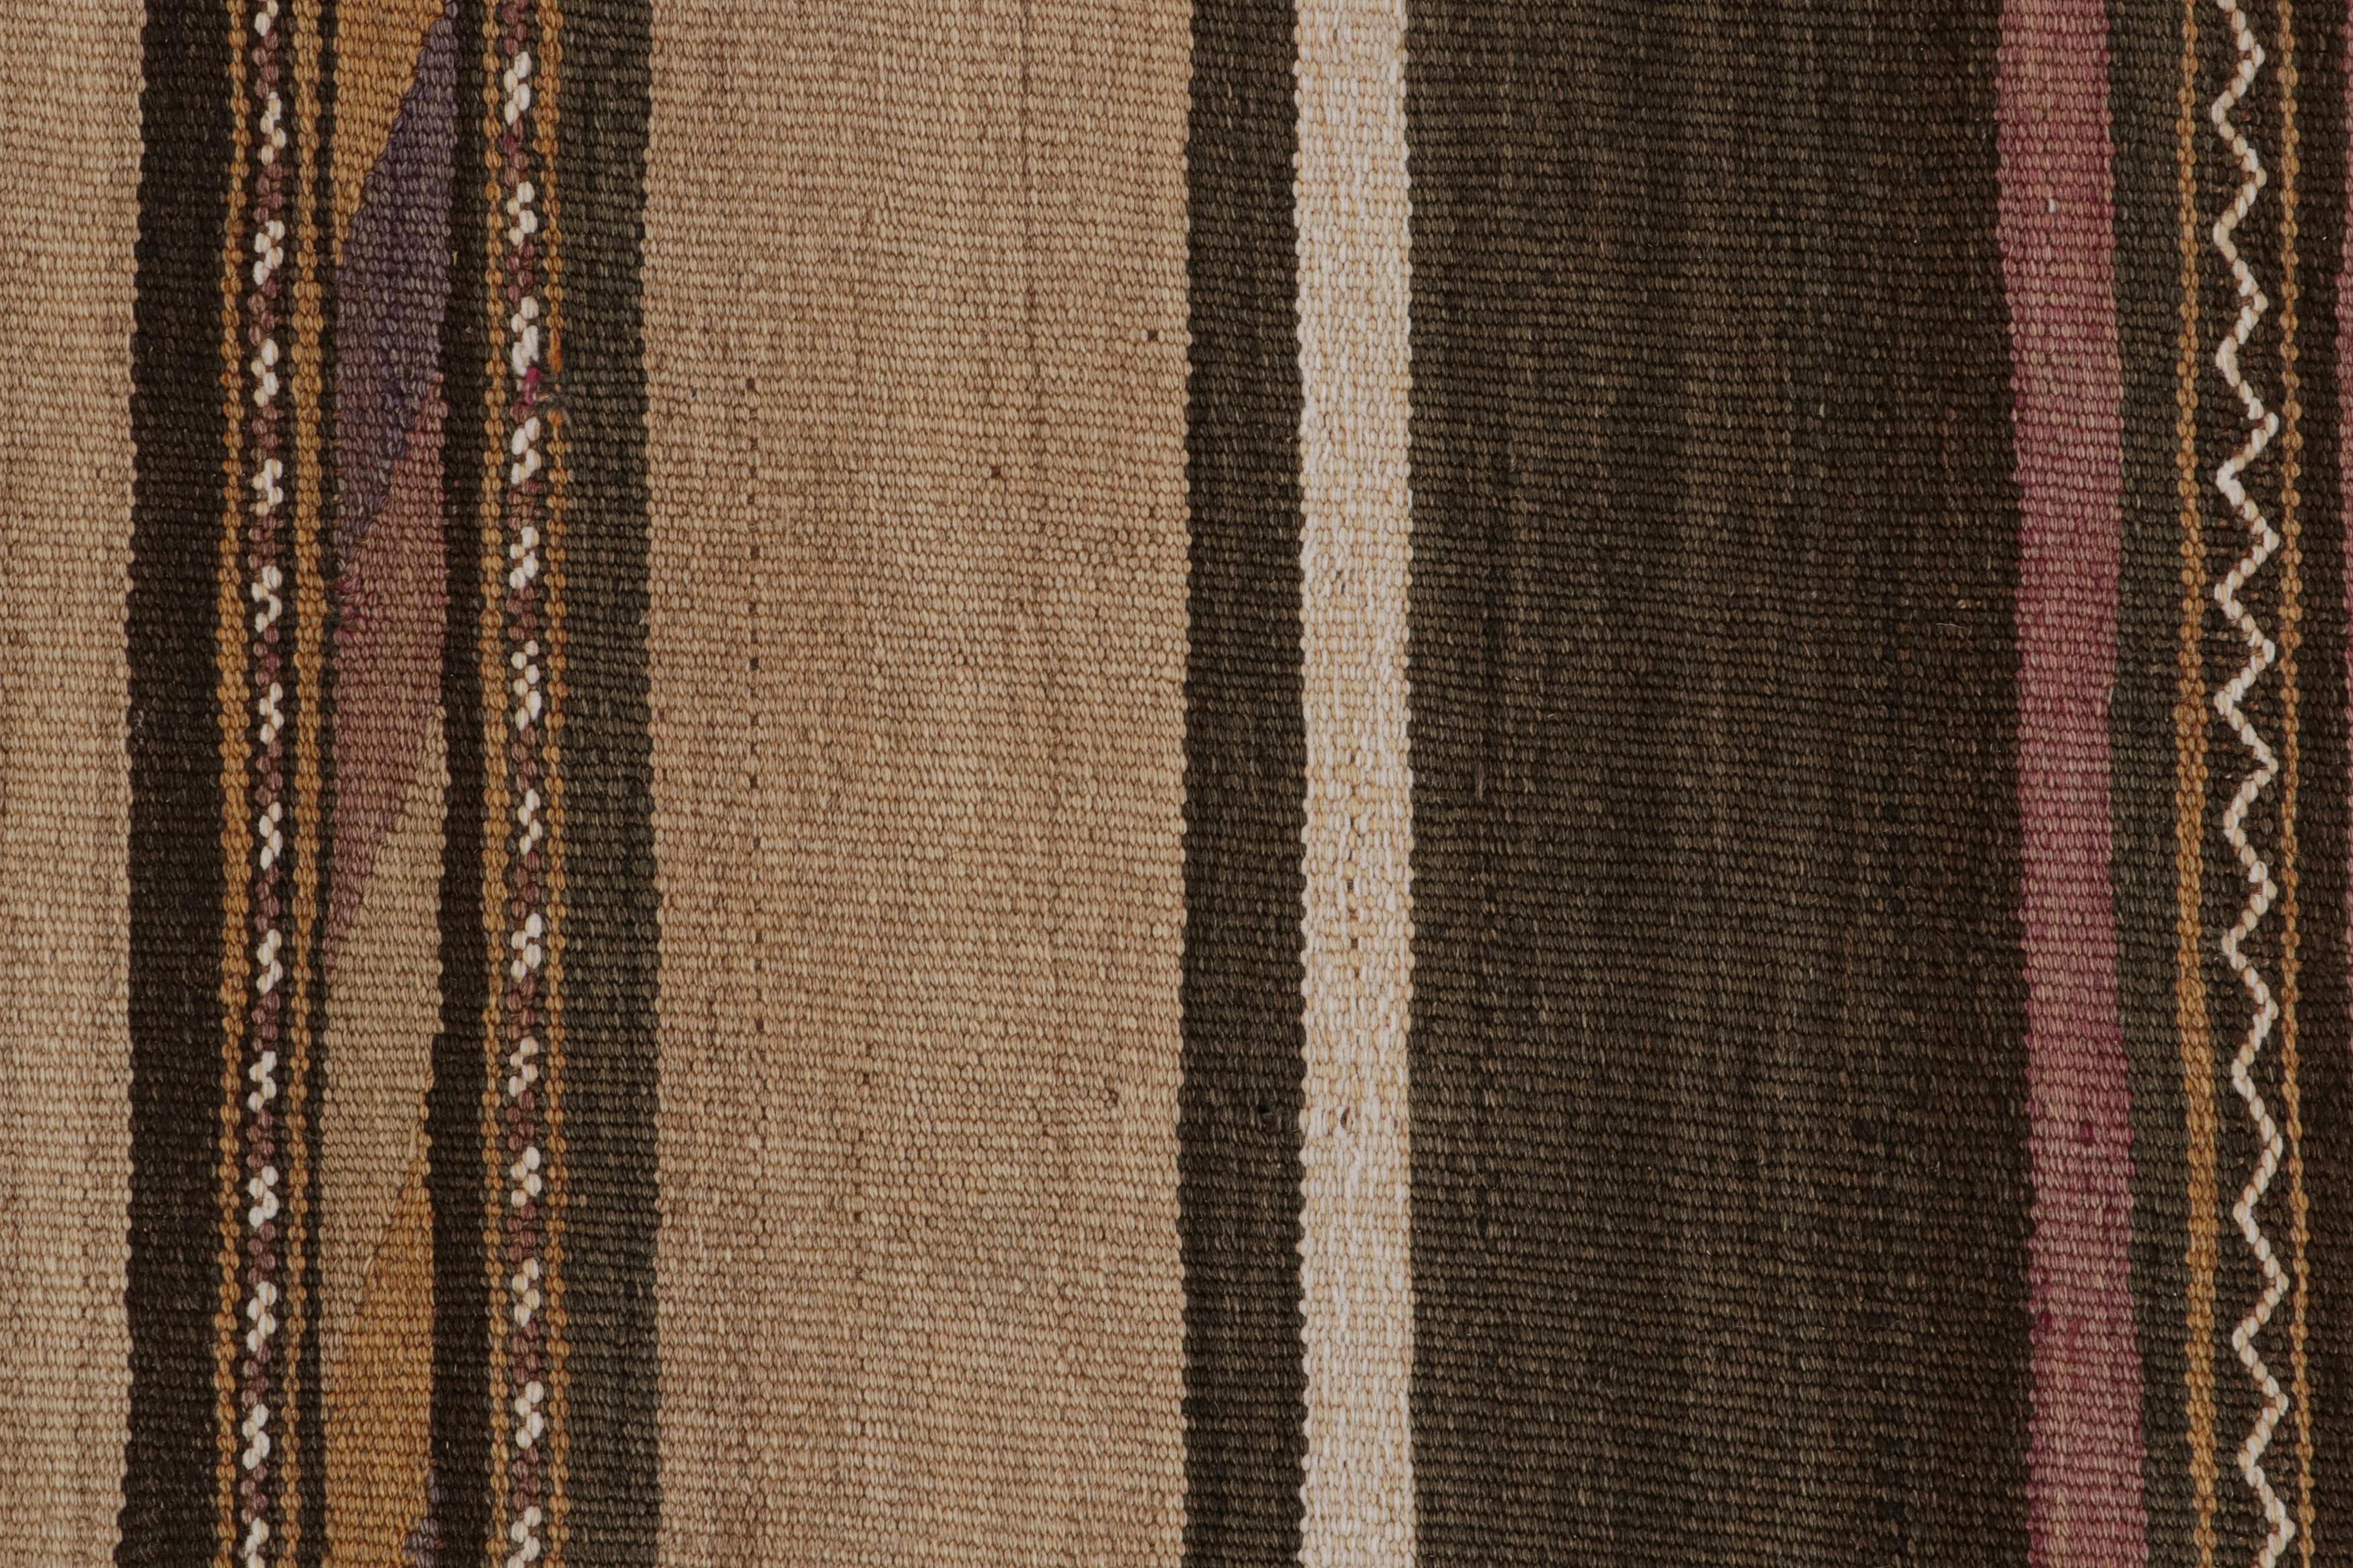 Wool Vintage Afghan Tribal Kilim with Brown, Red, White Stripes by Rug & Kilim For Sale